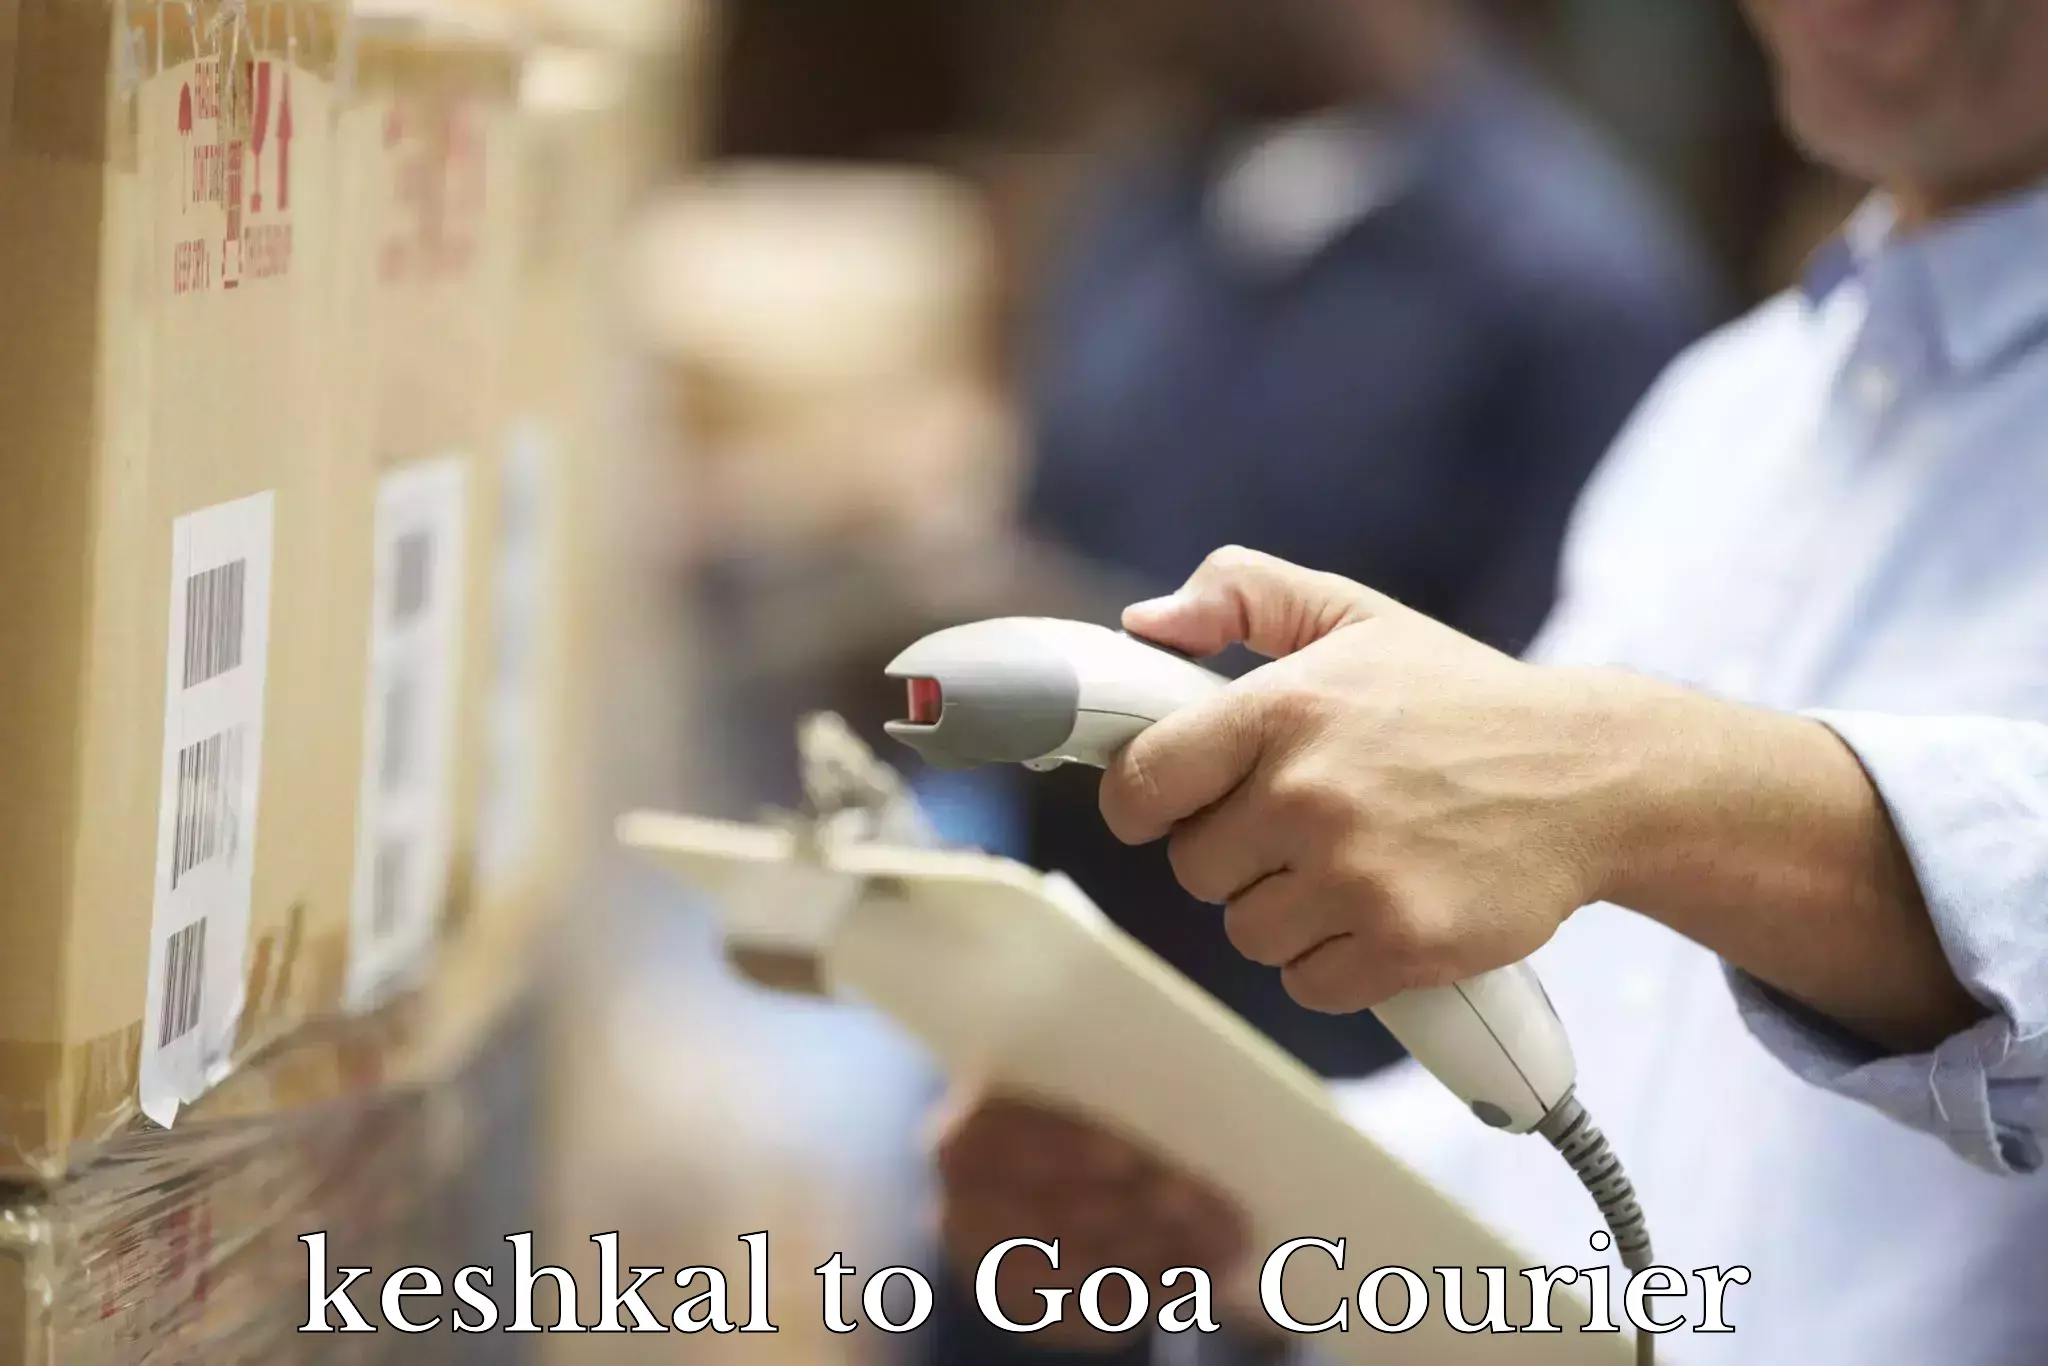 Efficient shipping operations keshkal to Panaji